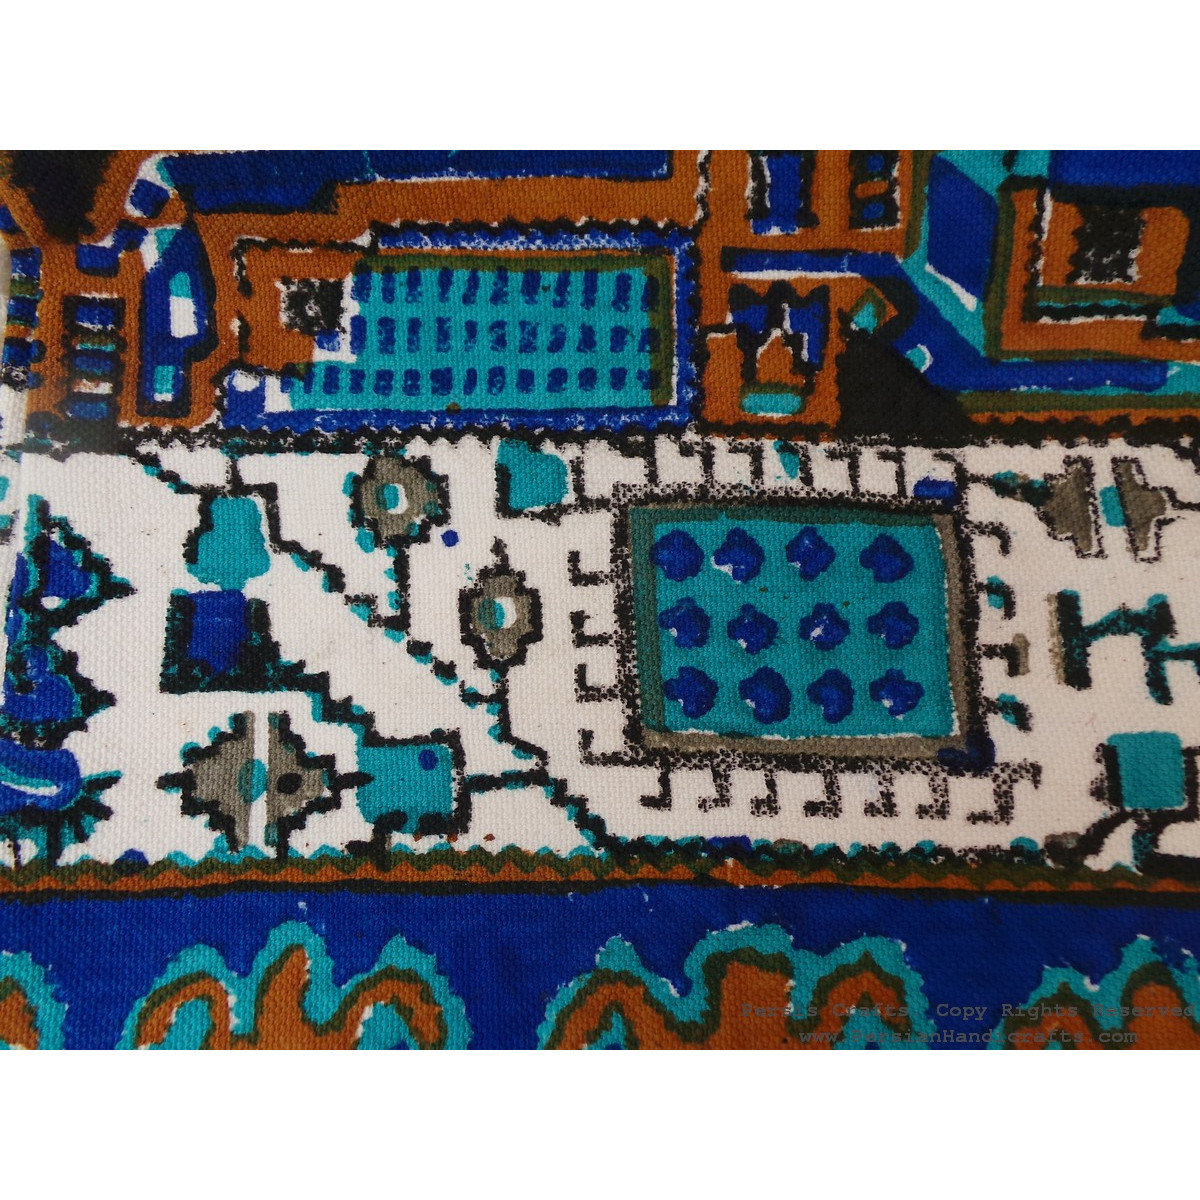 Persian Tapestry (Ghalamkar) Kilim Style Tablecloth - HGH3604-Persian Handicrafts